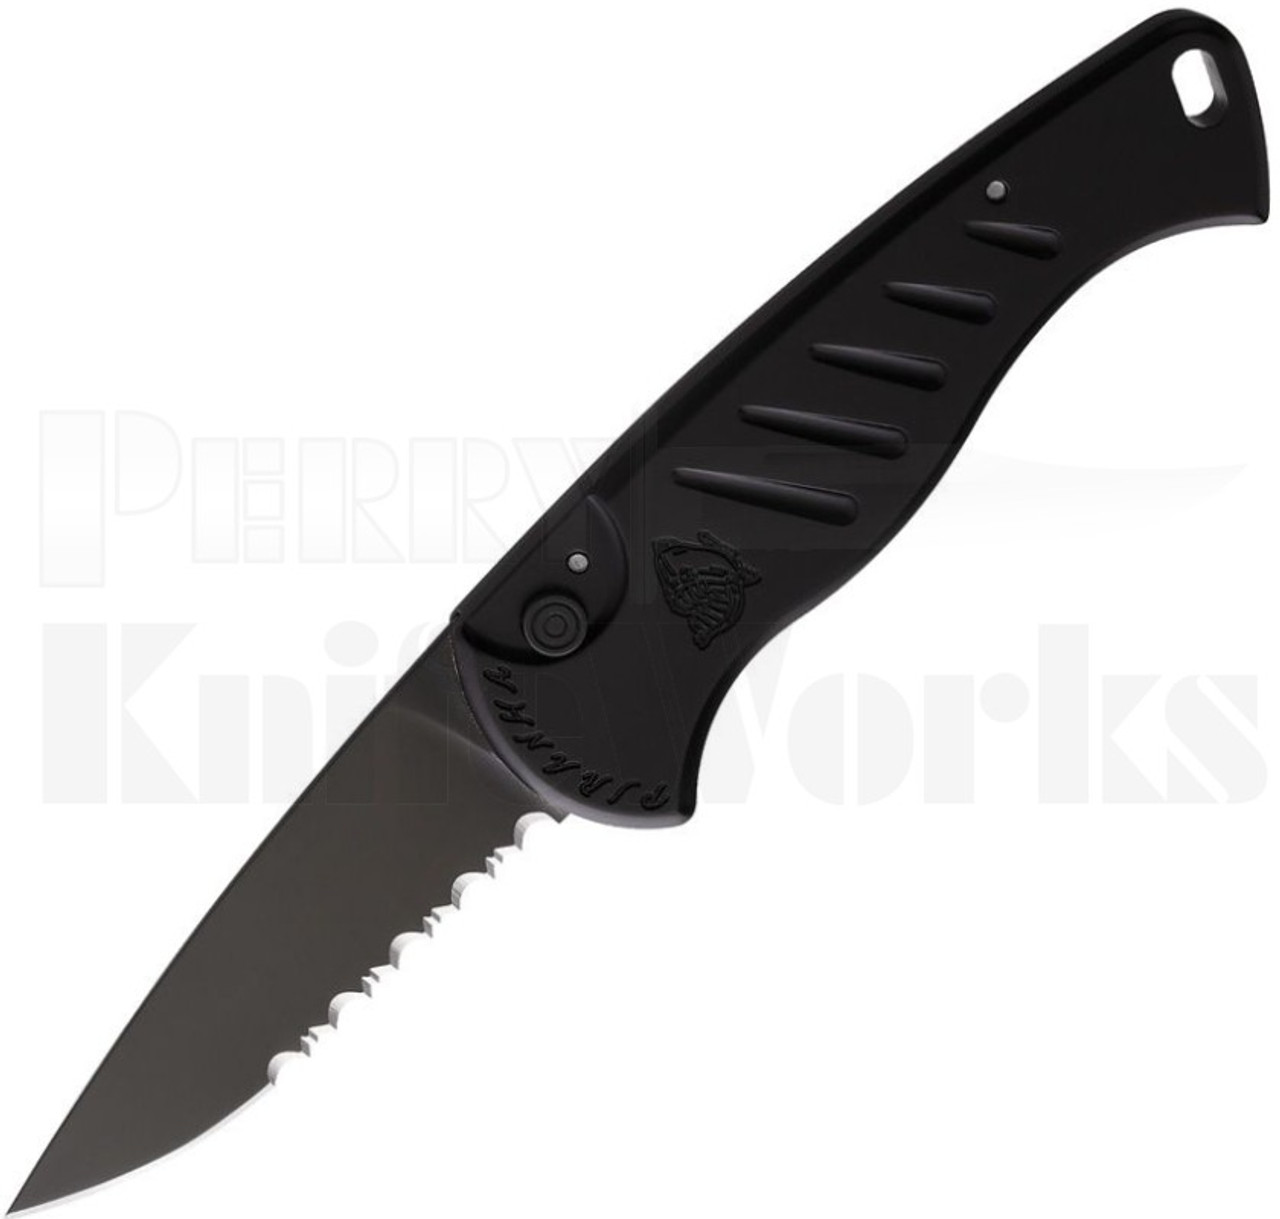 Piranha Fingerling Automatic Knife Black P-2BKTS l Black Serrated